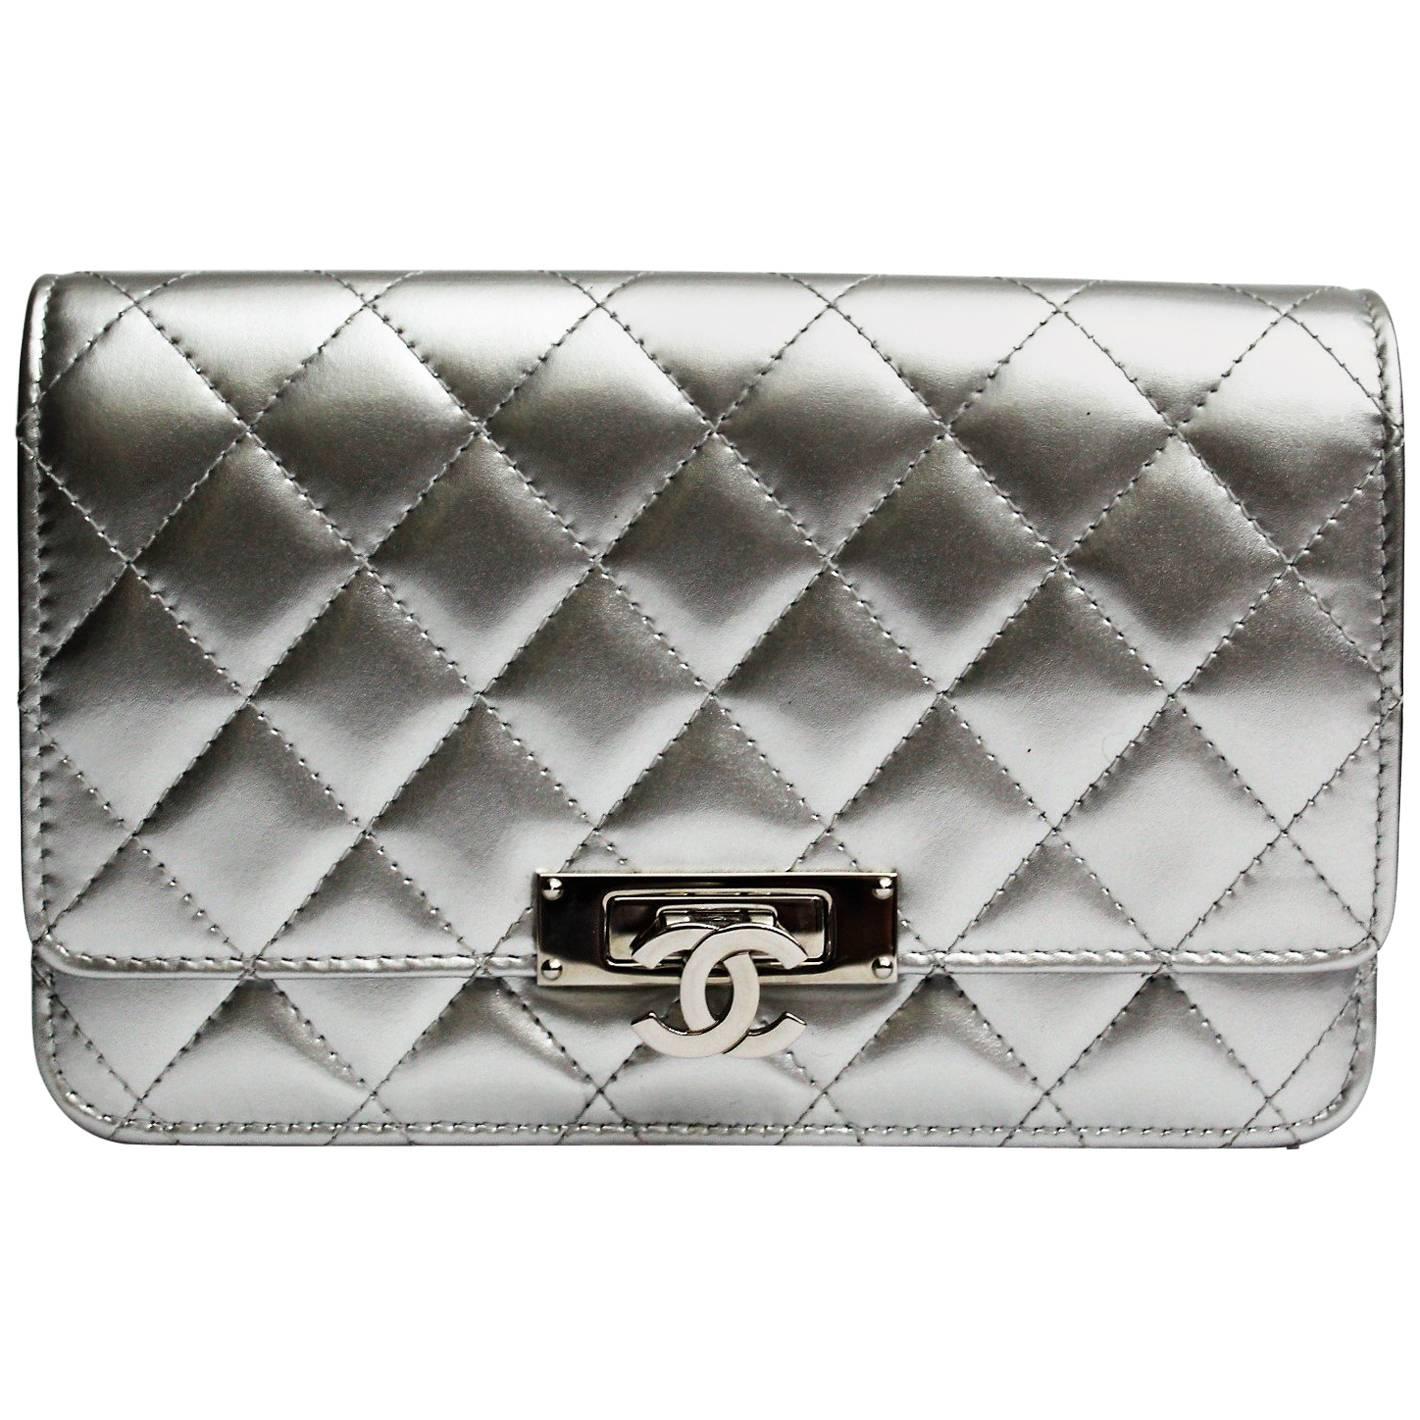 Chanel Silver Leather Crossbody Bag